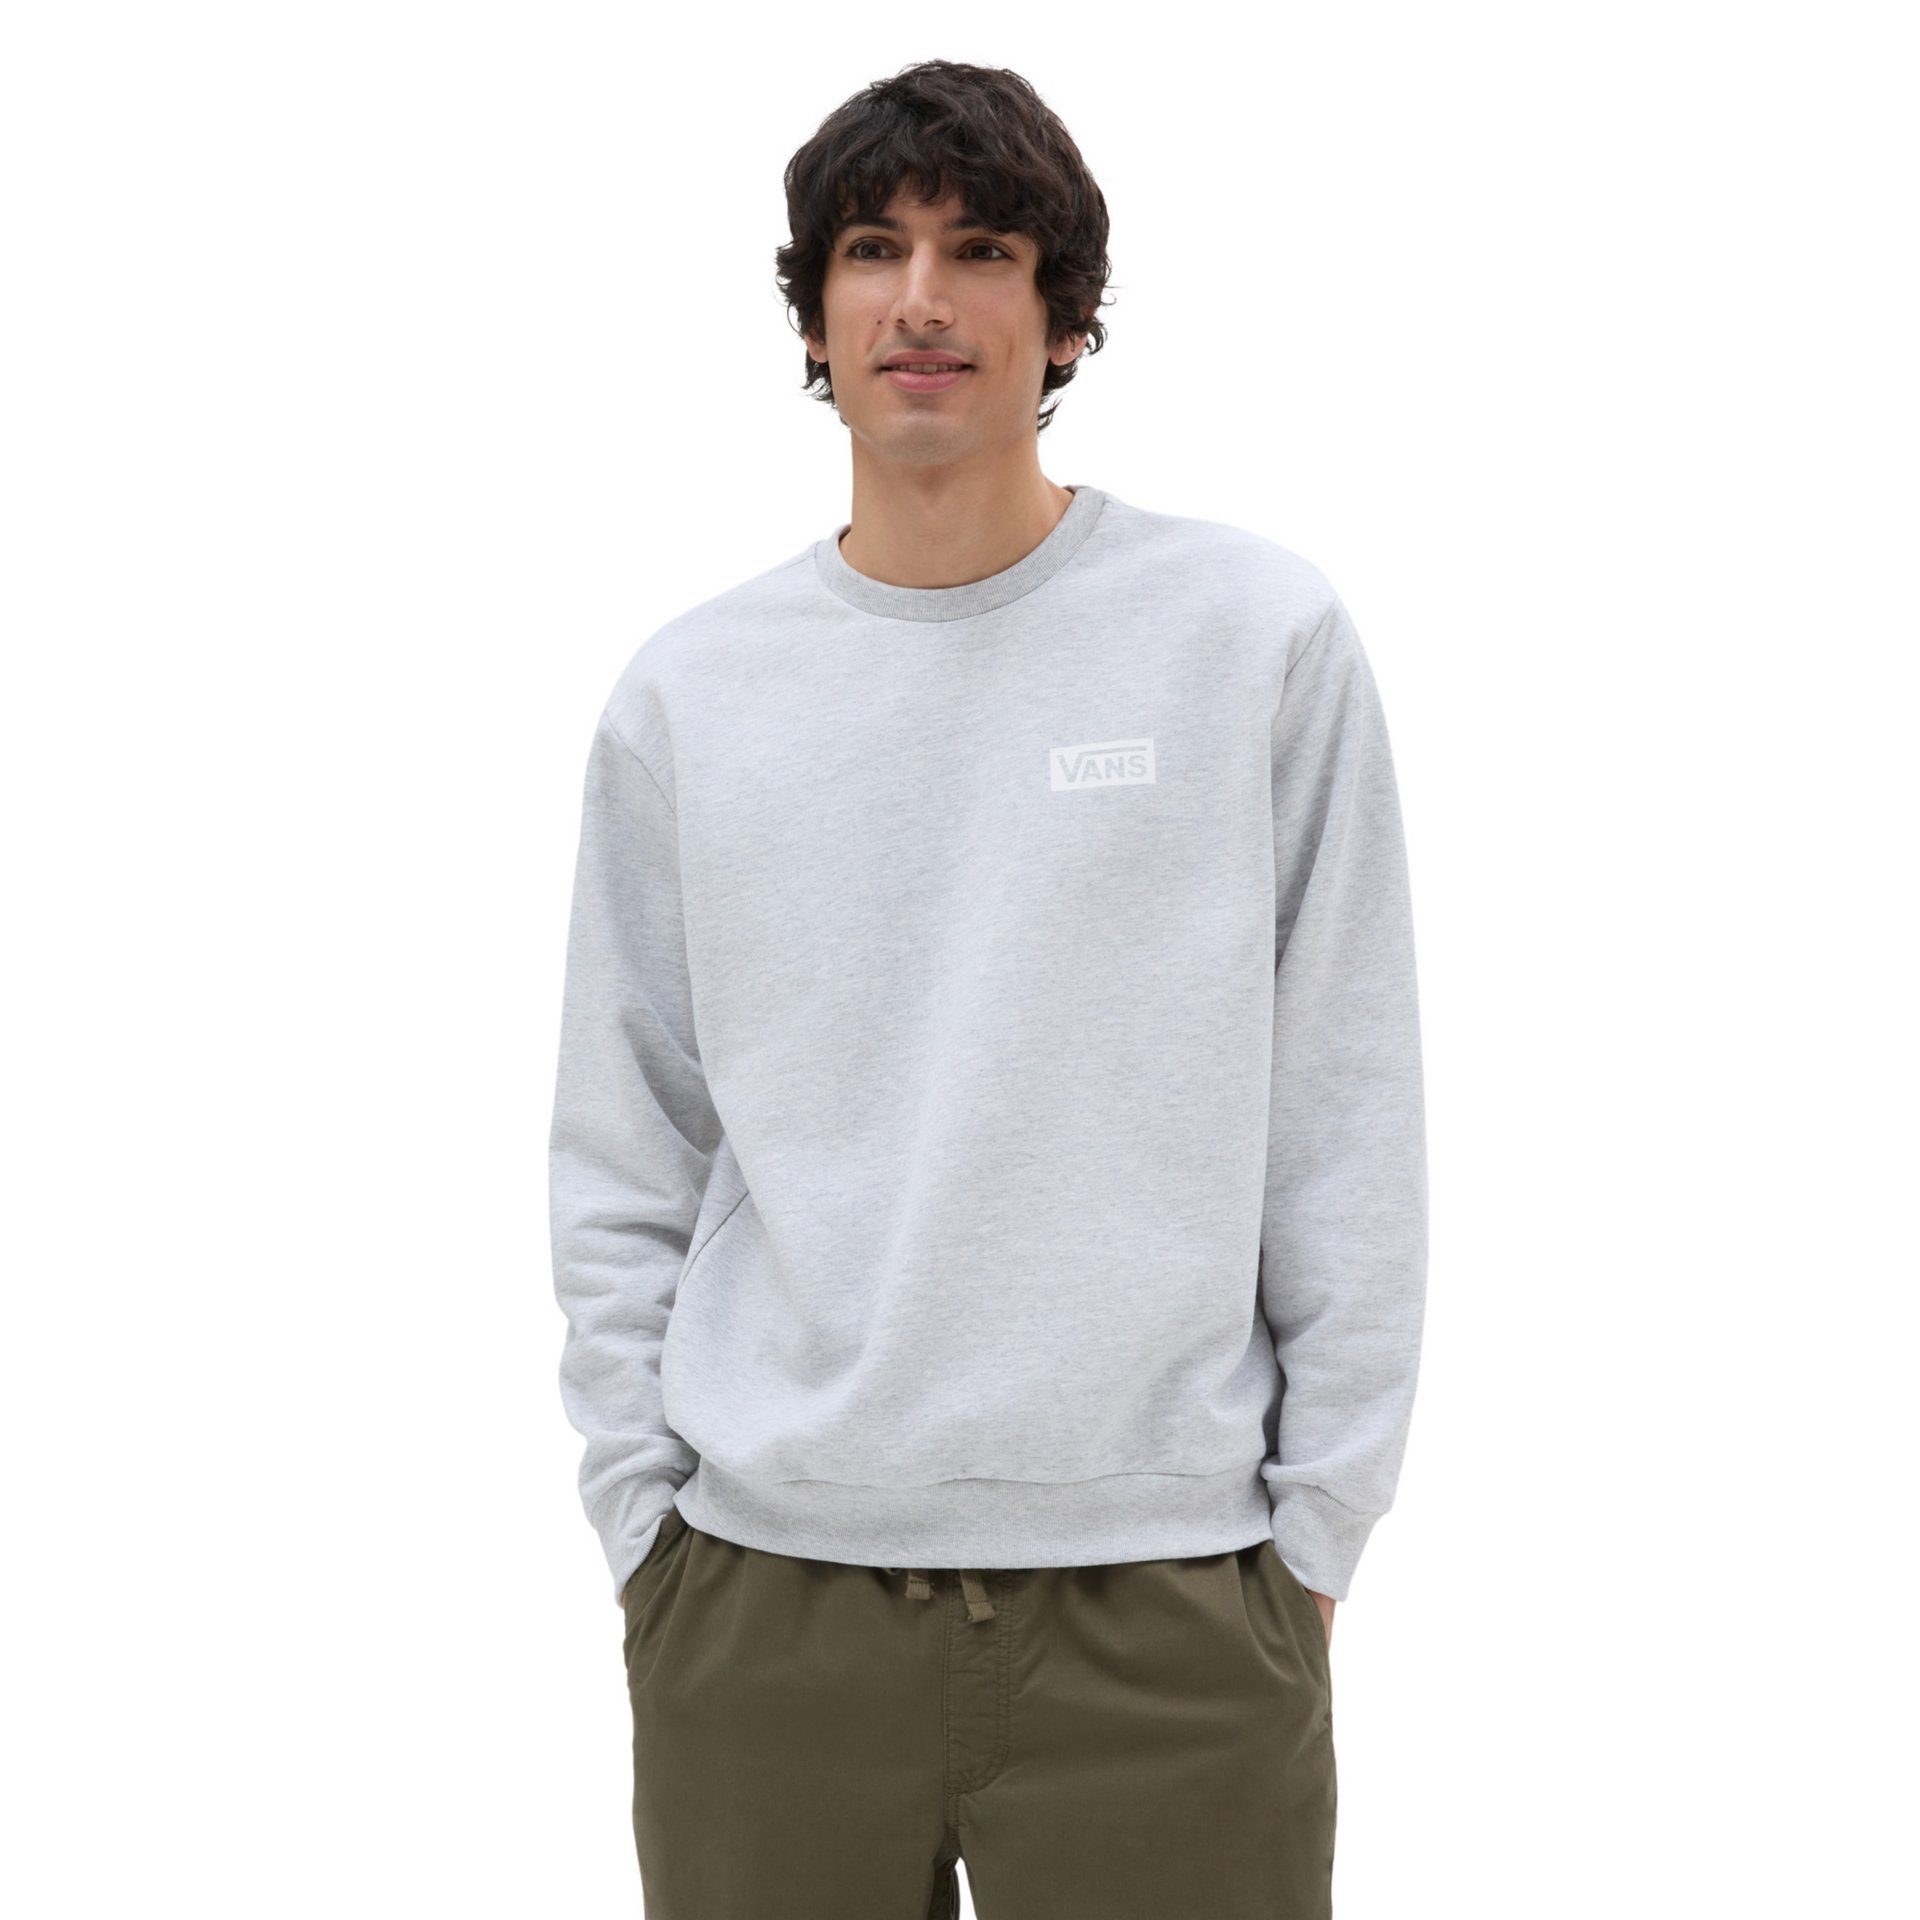 Vans Sweatshirt RELAXED FIT CREW mit Markenlabel light grey h